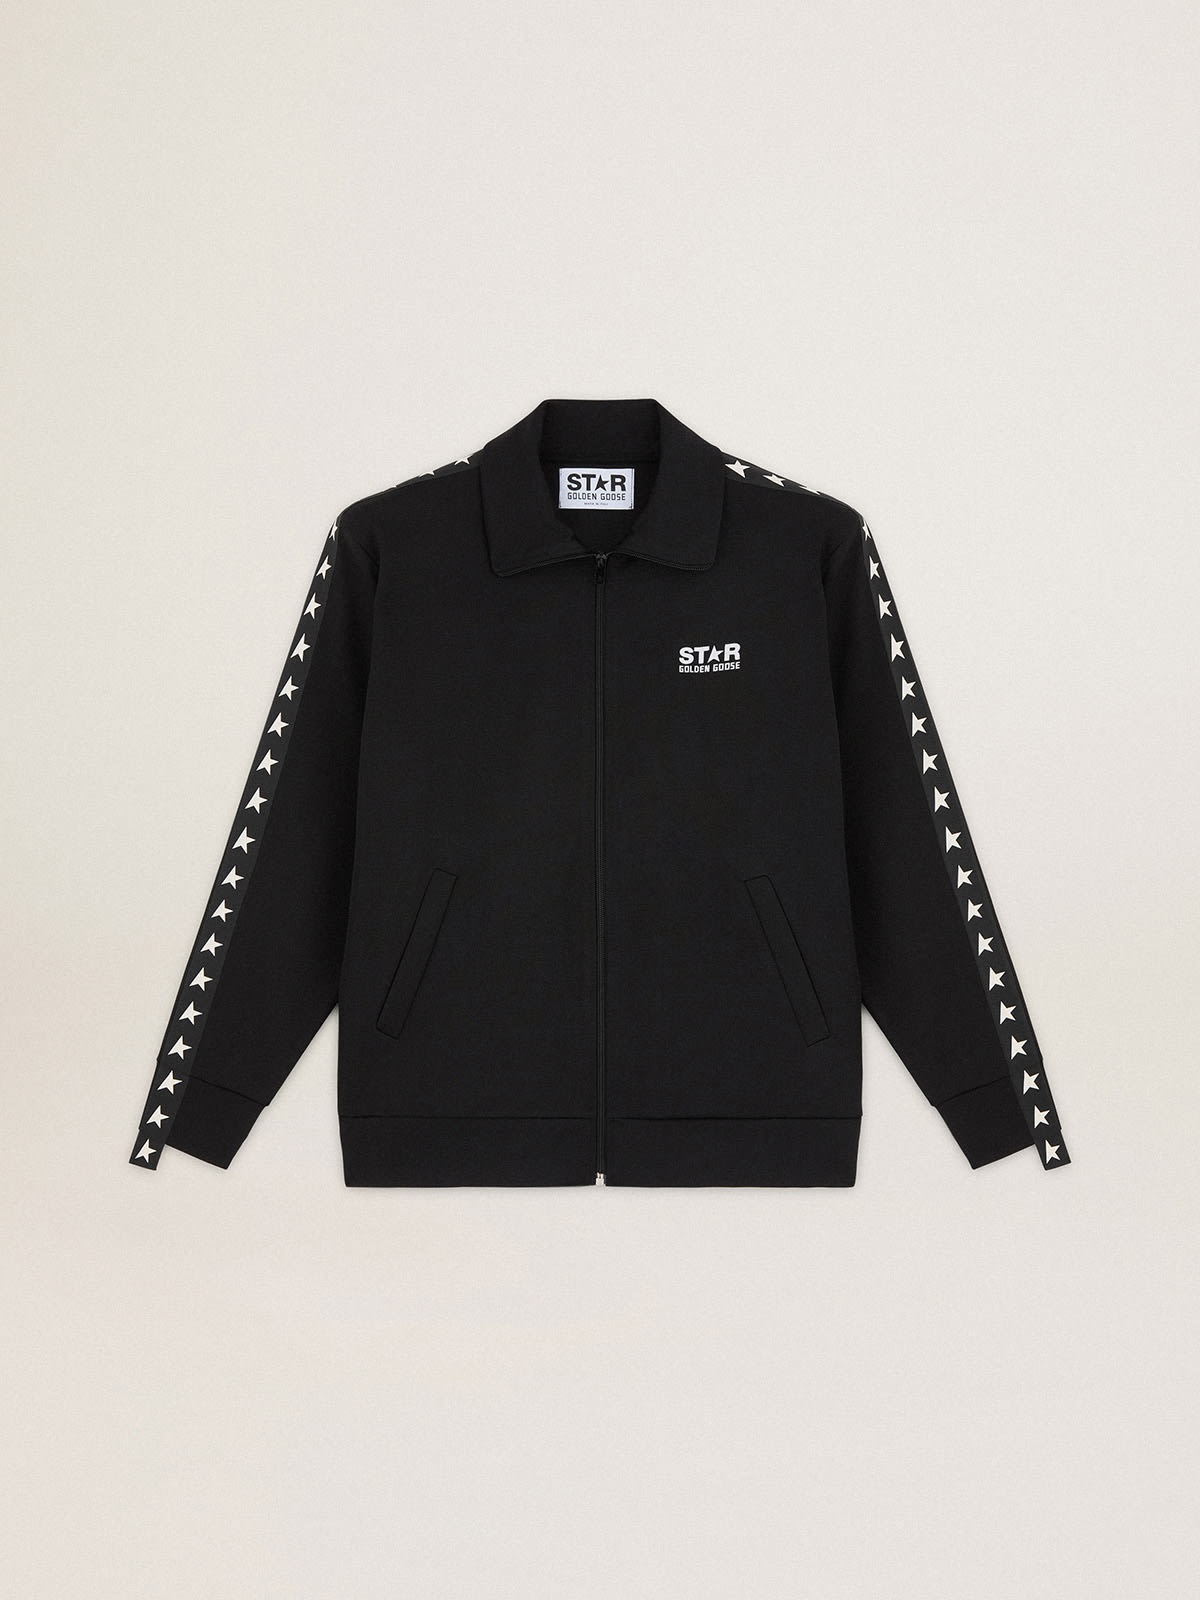 Golden Goose - Men’s black zipped sweatshirt with contrasting white stars in 